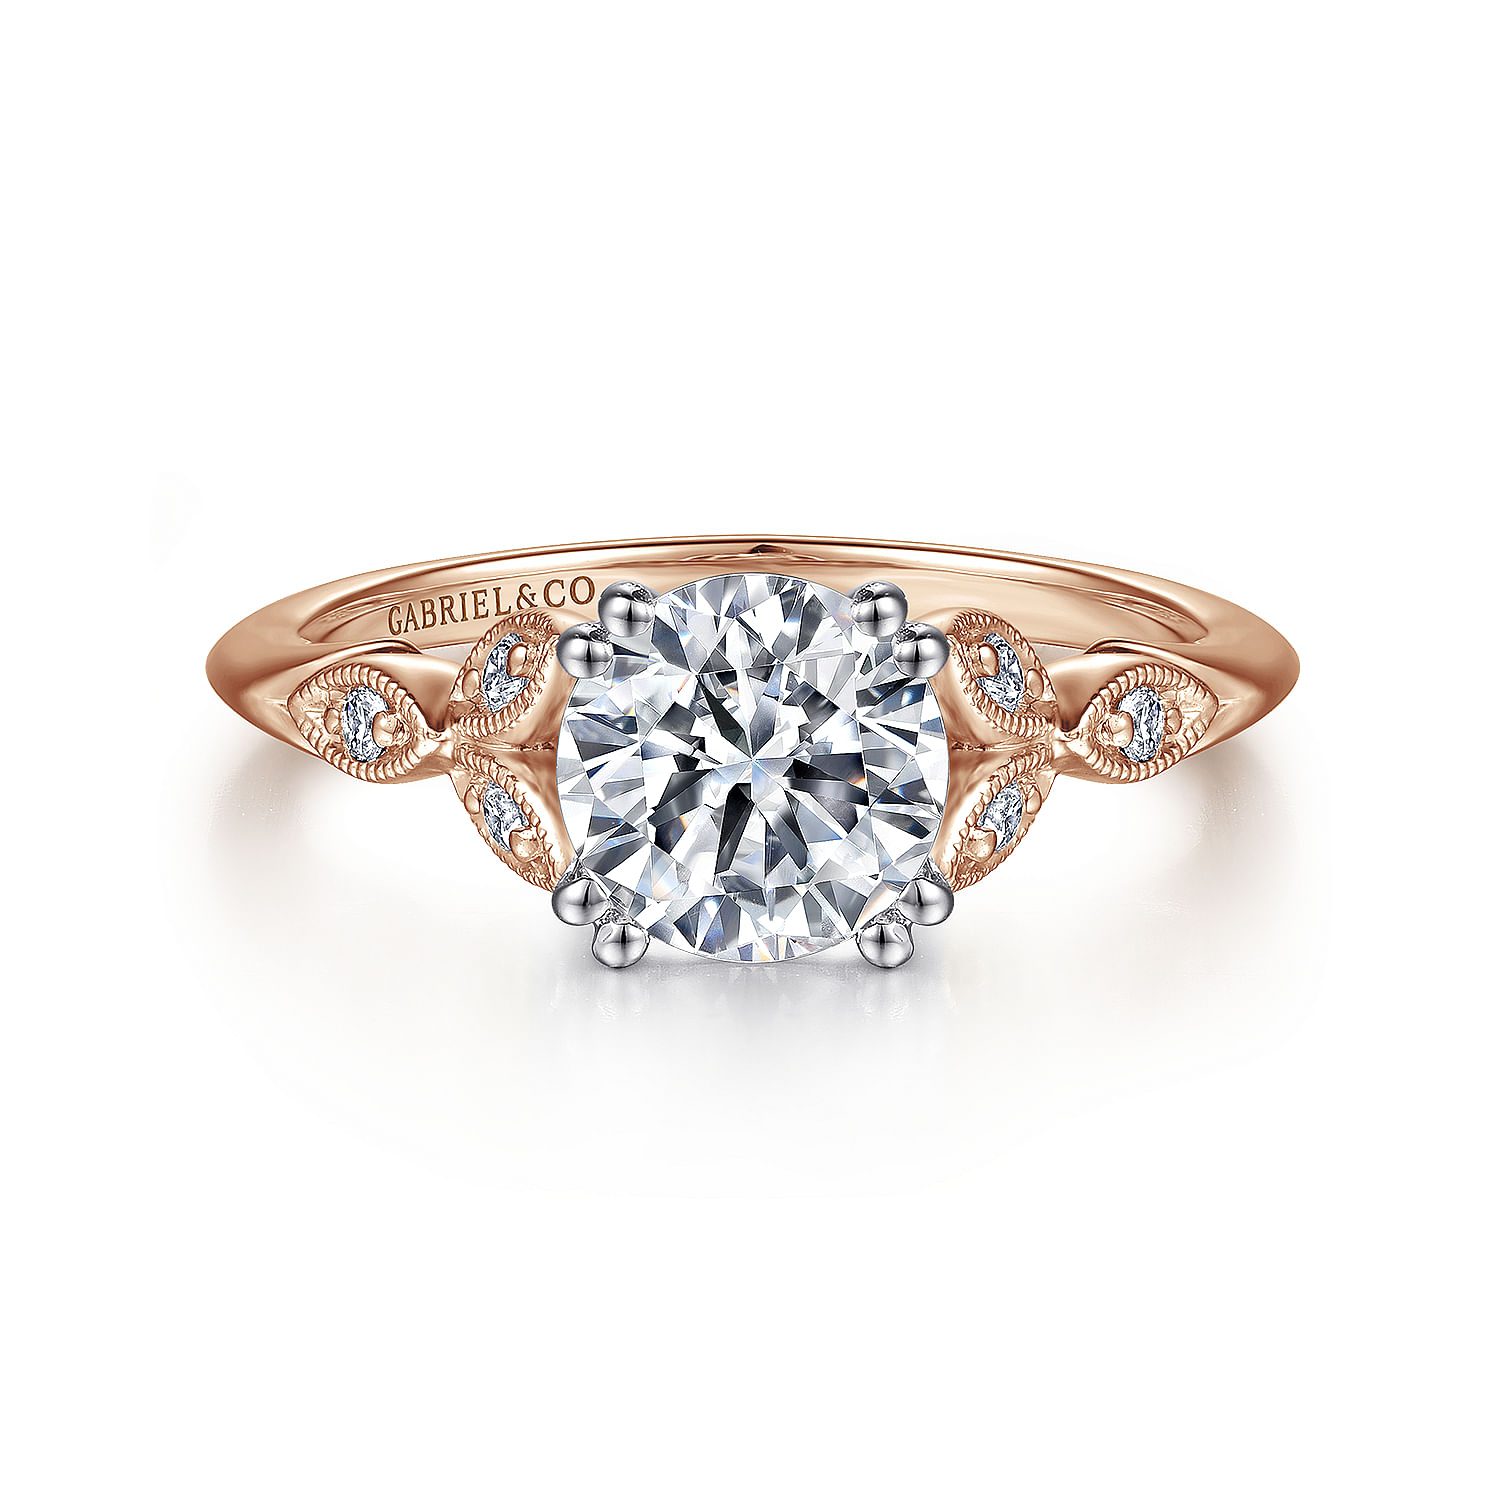 Celia---14K-White-Rose-Gold-Round-Diamond-Engagement-Ring1